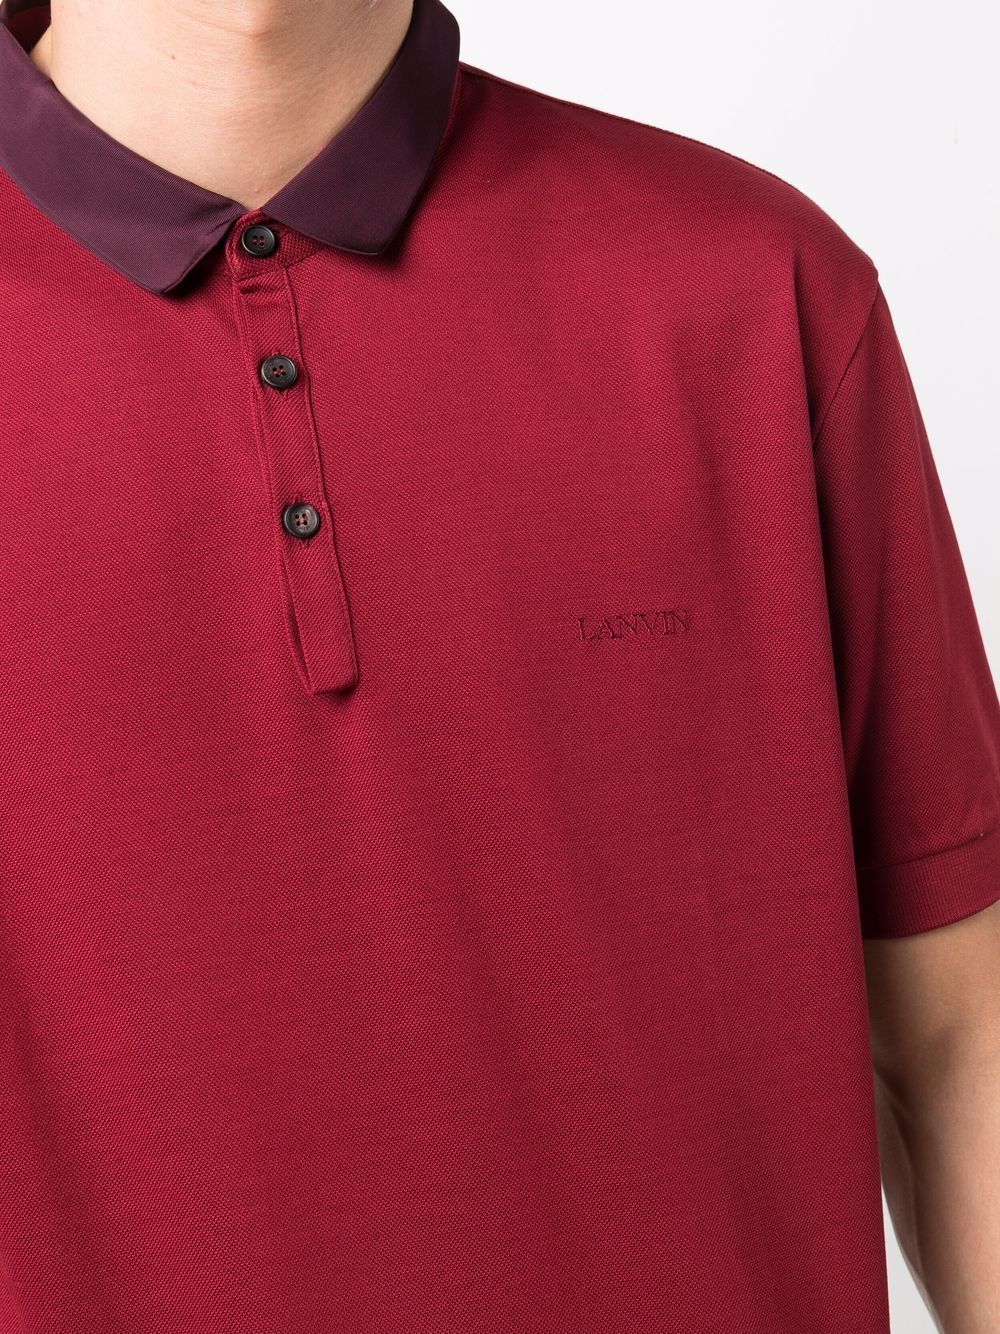 LANVIN Embroidered Logo Polo Shirt Red - MAISONDEFASHION.COM